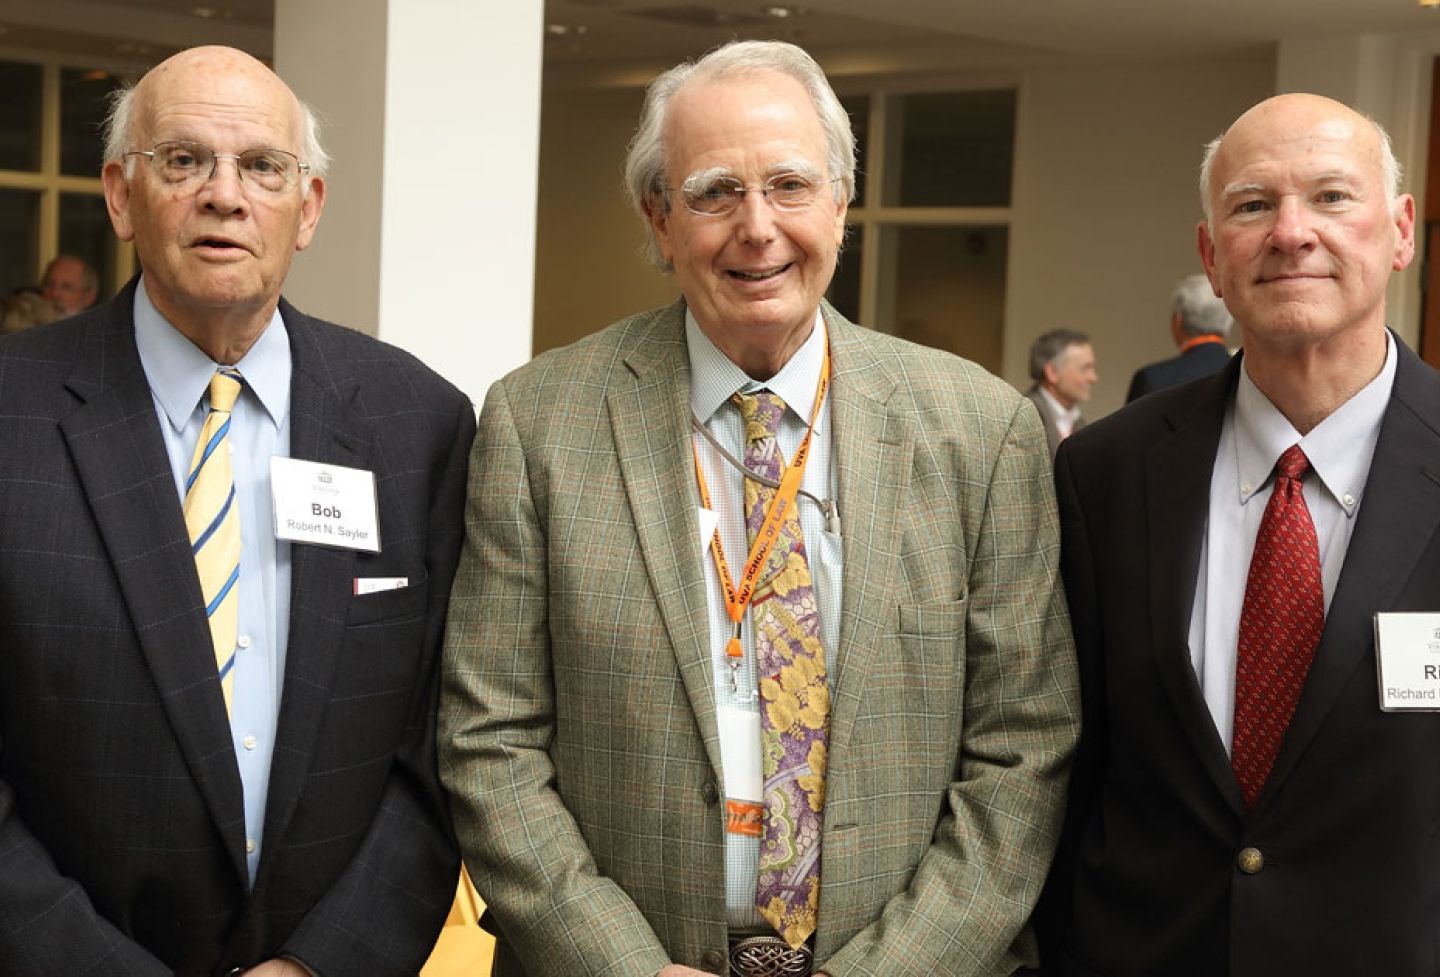 Professors Bob Sayler, Tom White and Rich Balnave